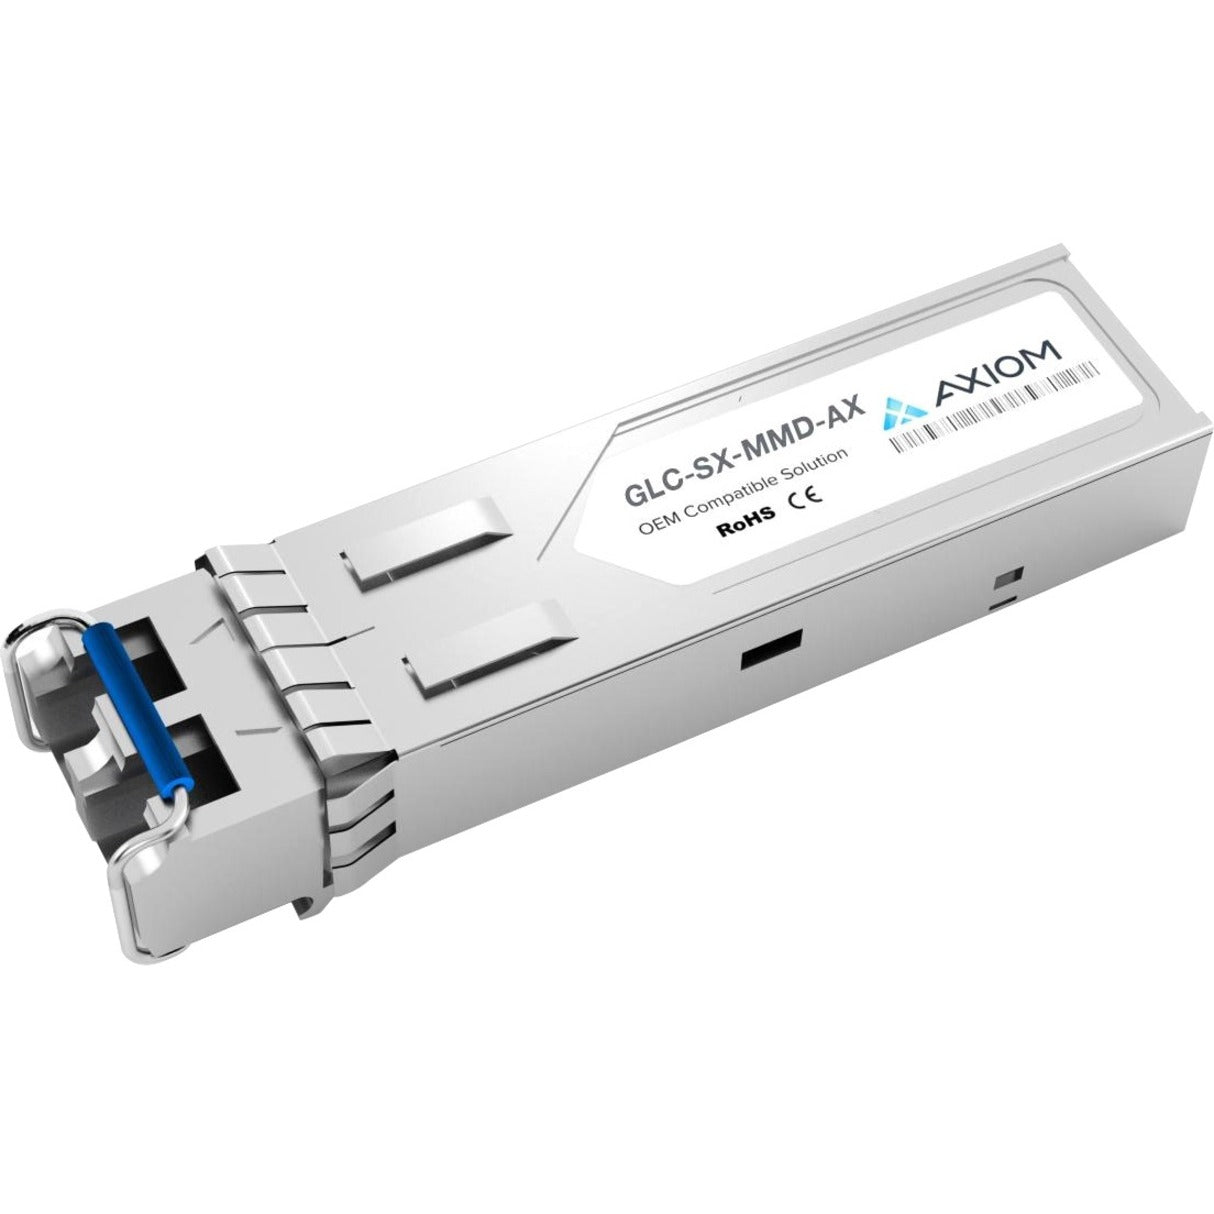 Axiom GLC-SX-MMD-AX 1000BASE-SX SFP Transceiver for Cisco, Gigabit Ethernet, Multi-mode, Optical Fiber